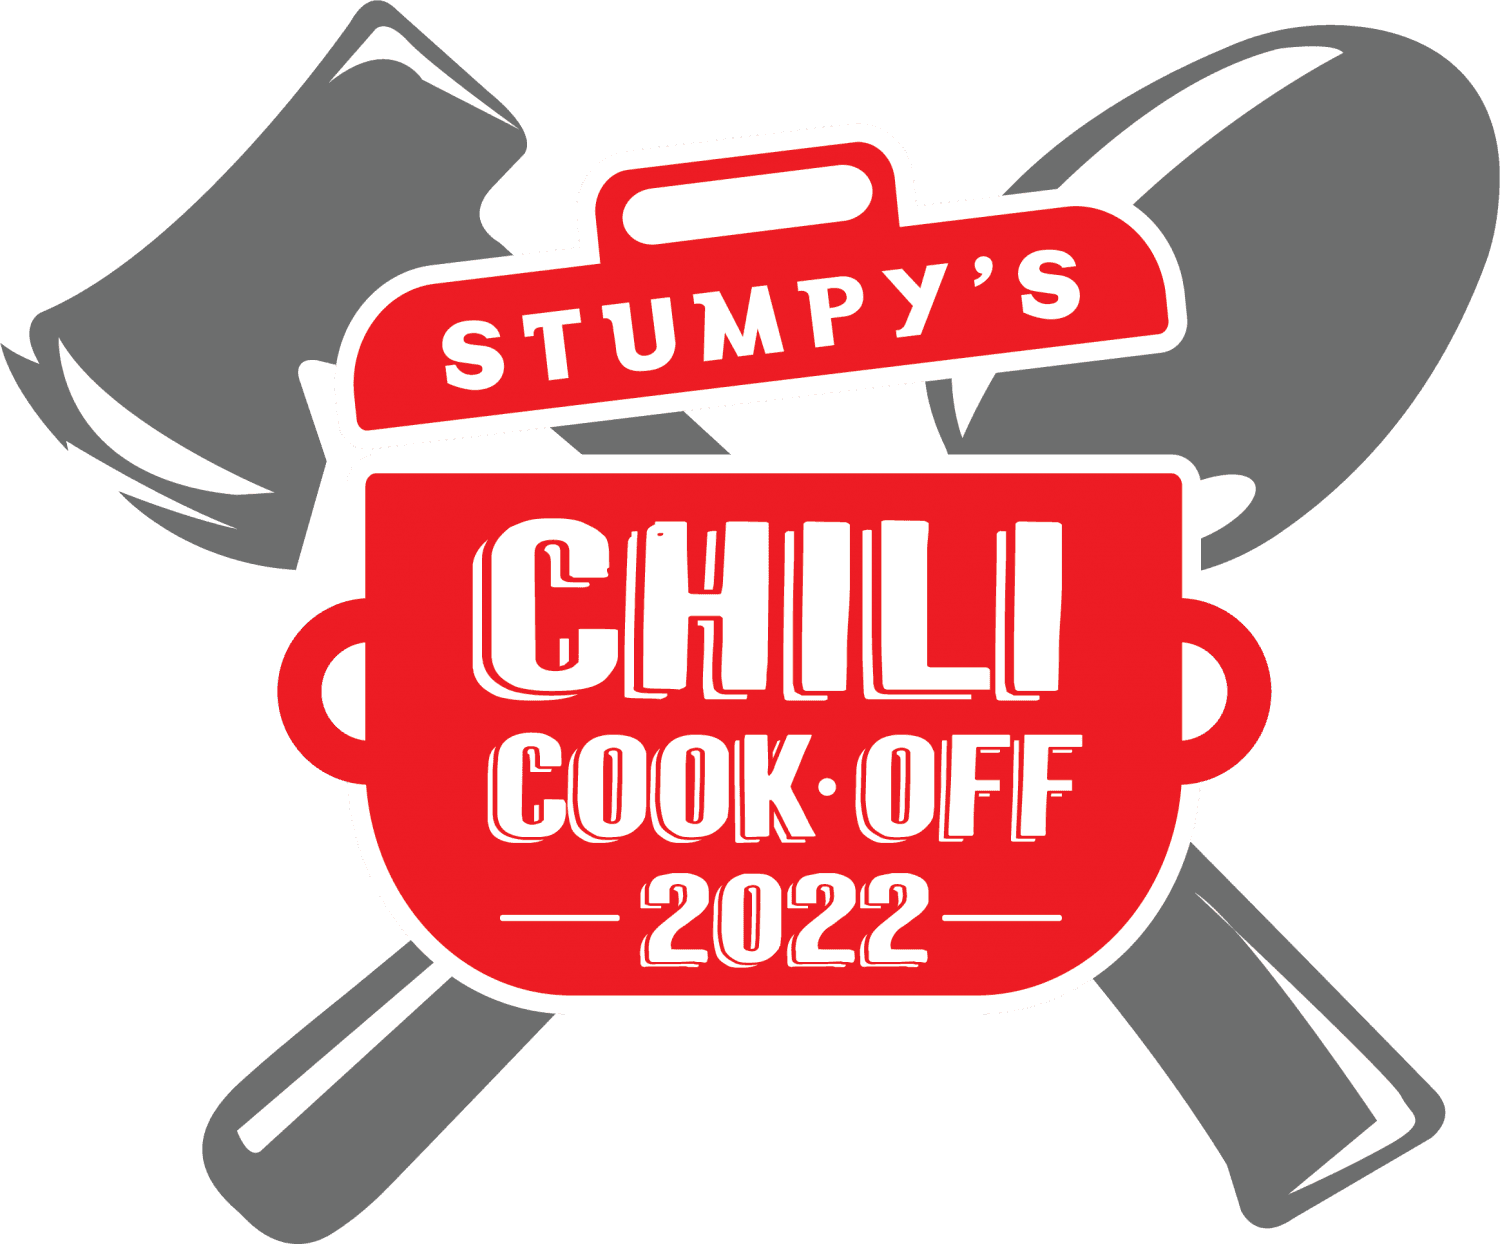 Stumpy's 1st Annual Chili Cookoff